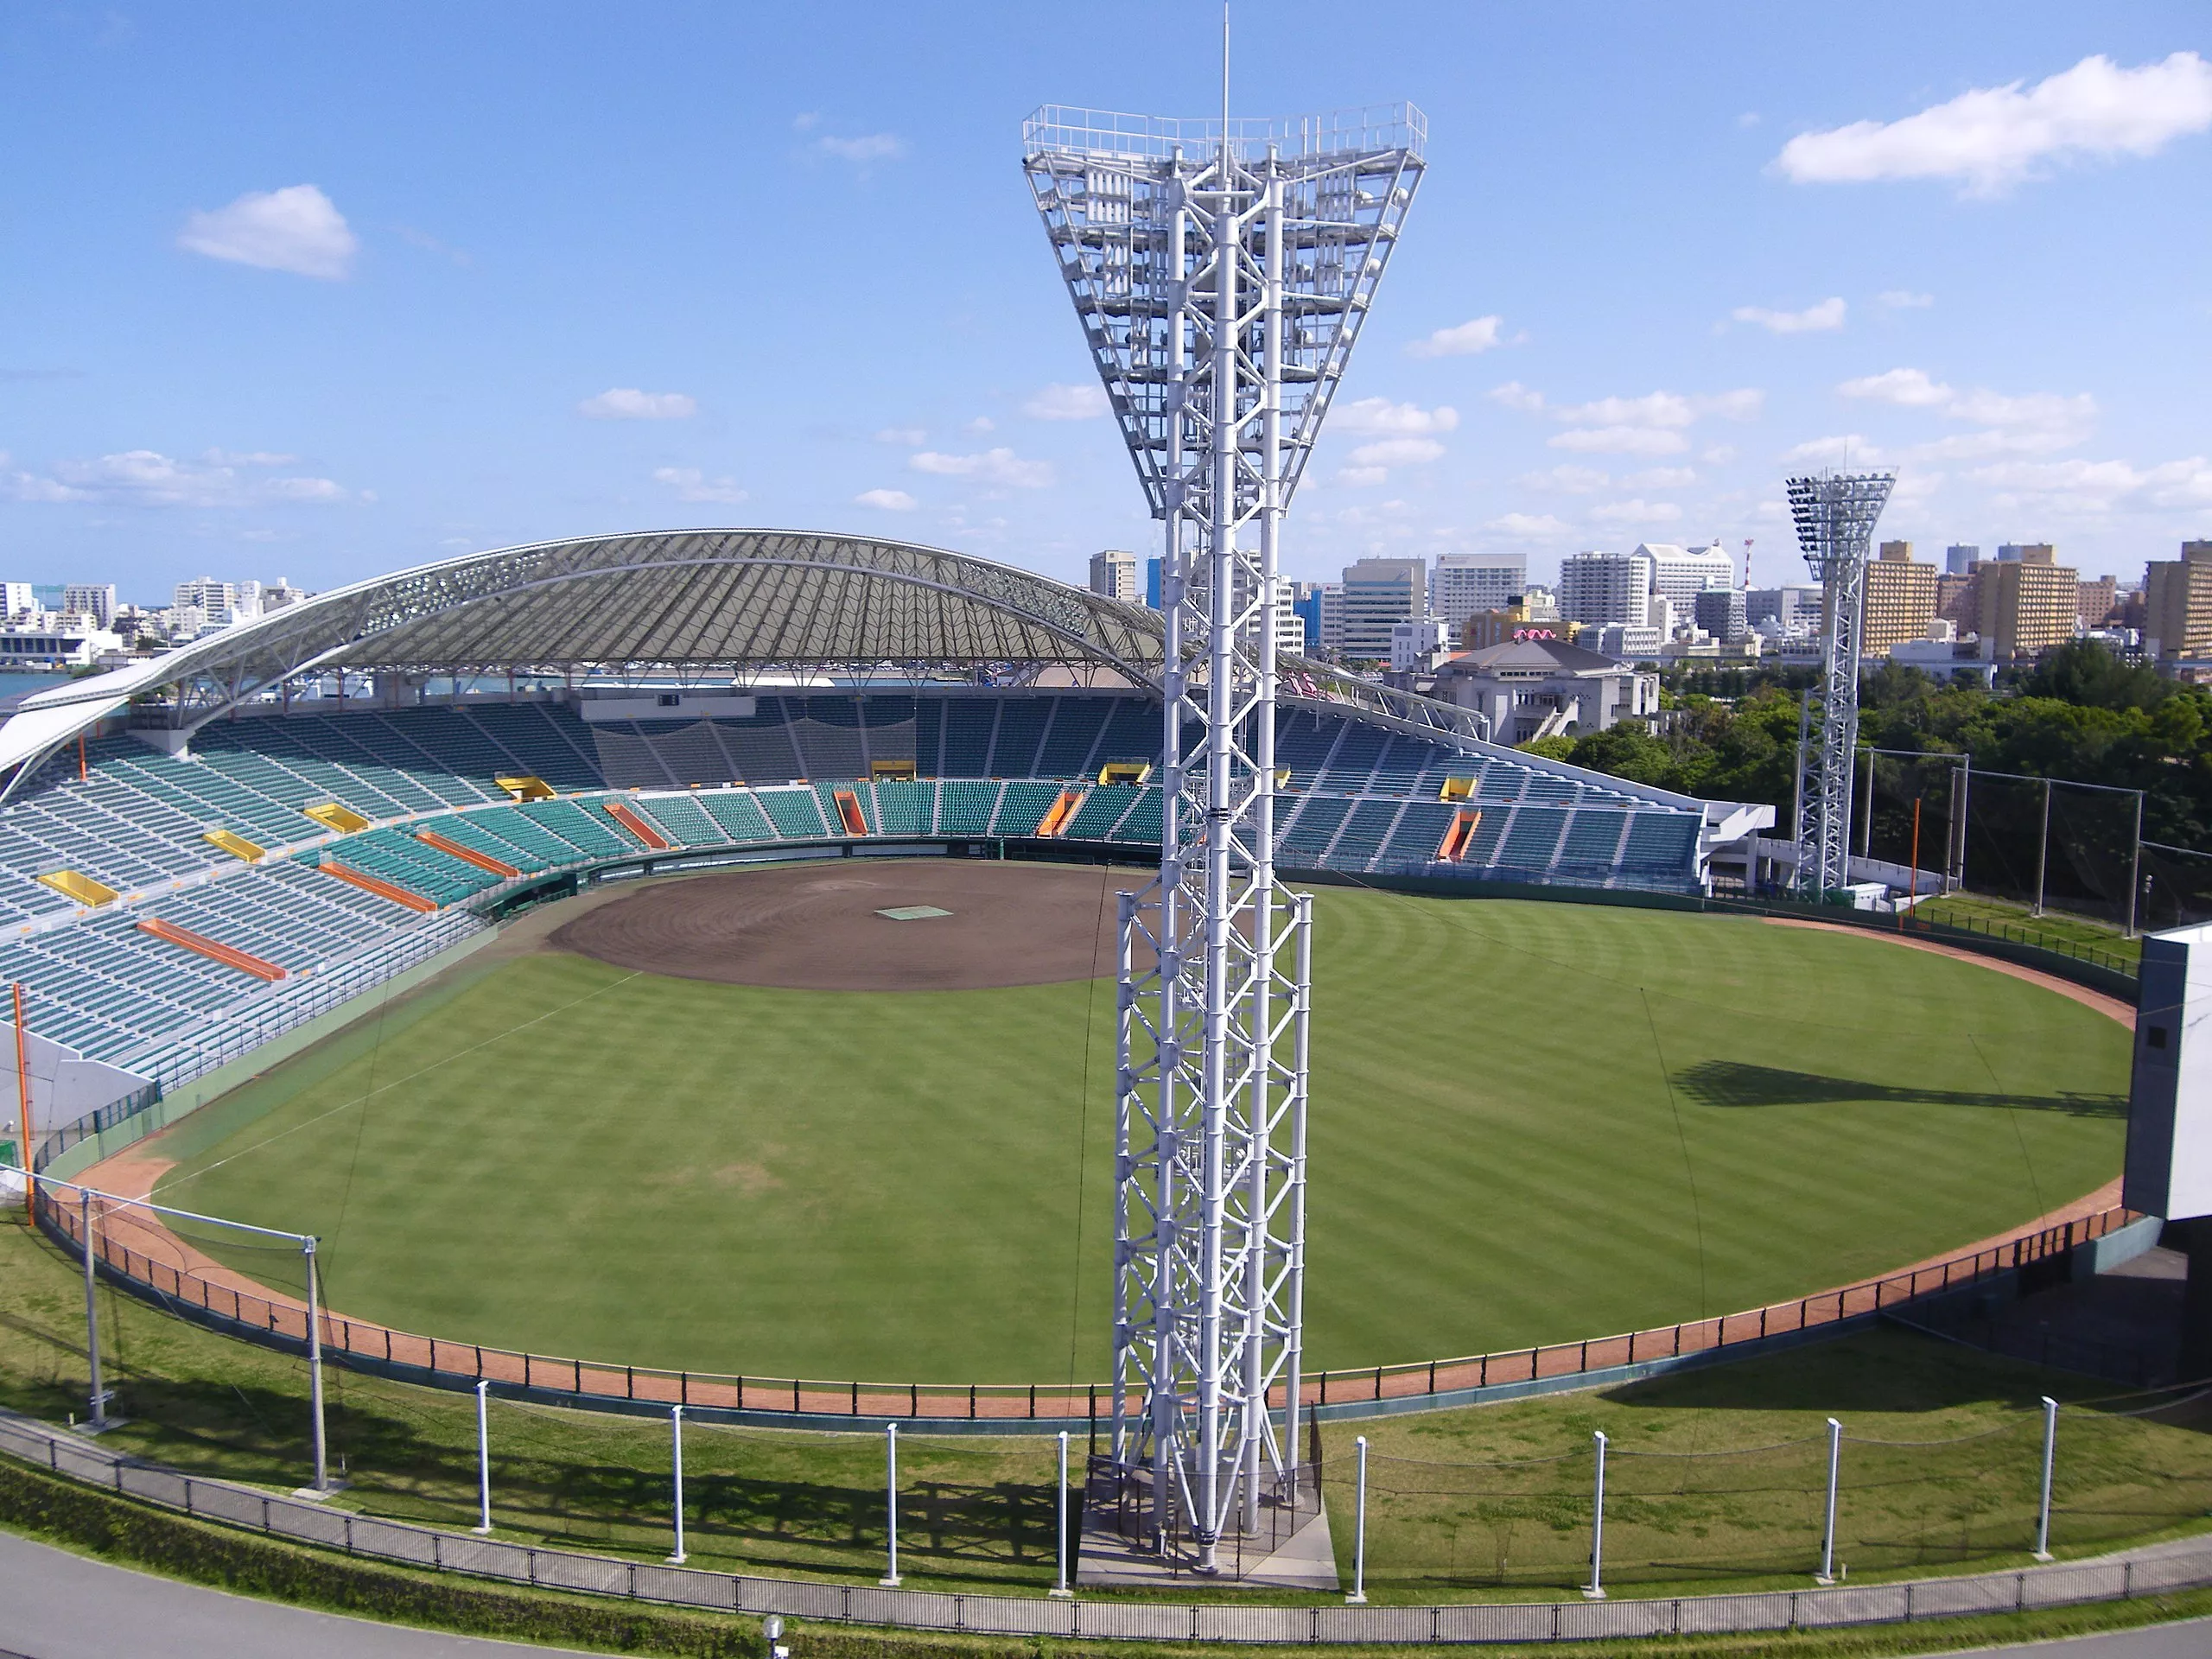 Okinawa Cellular Stadium in Japan, East Asia | Baseball - Rated 3.4